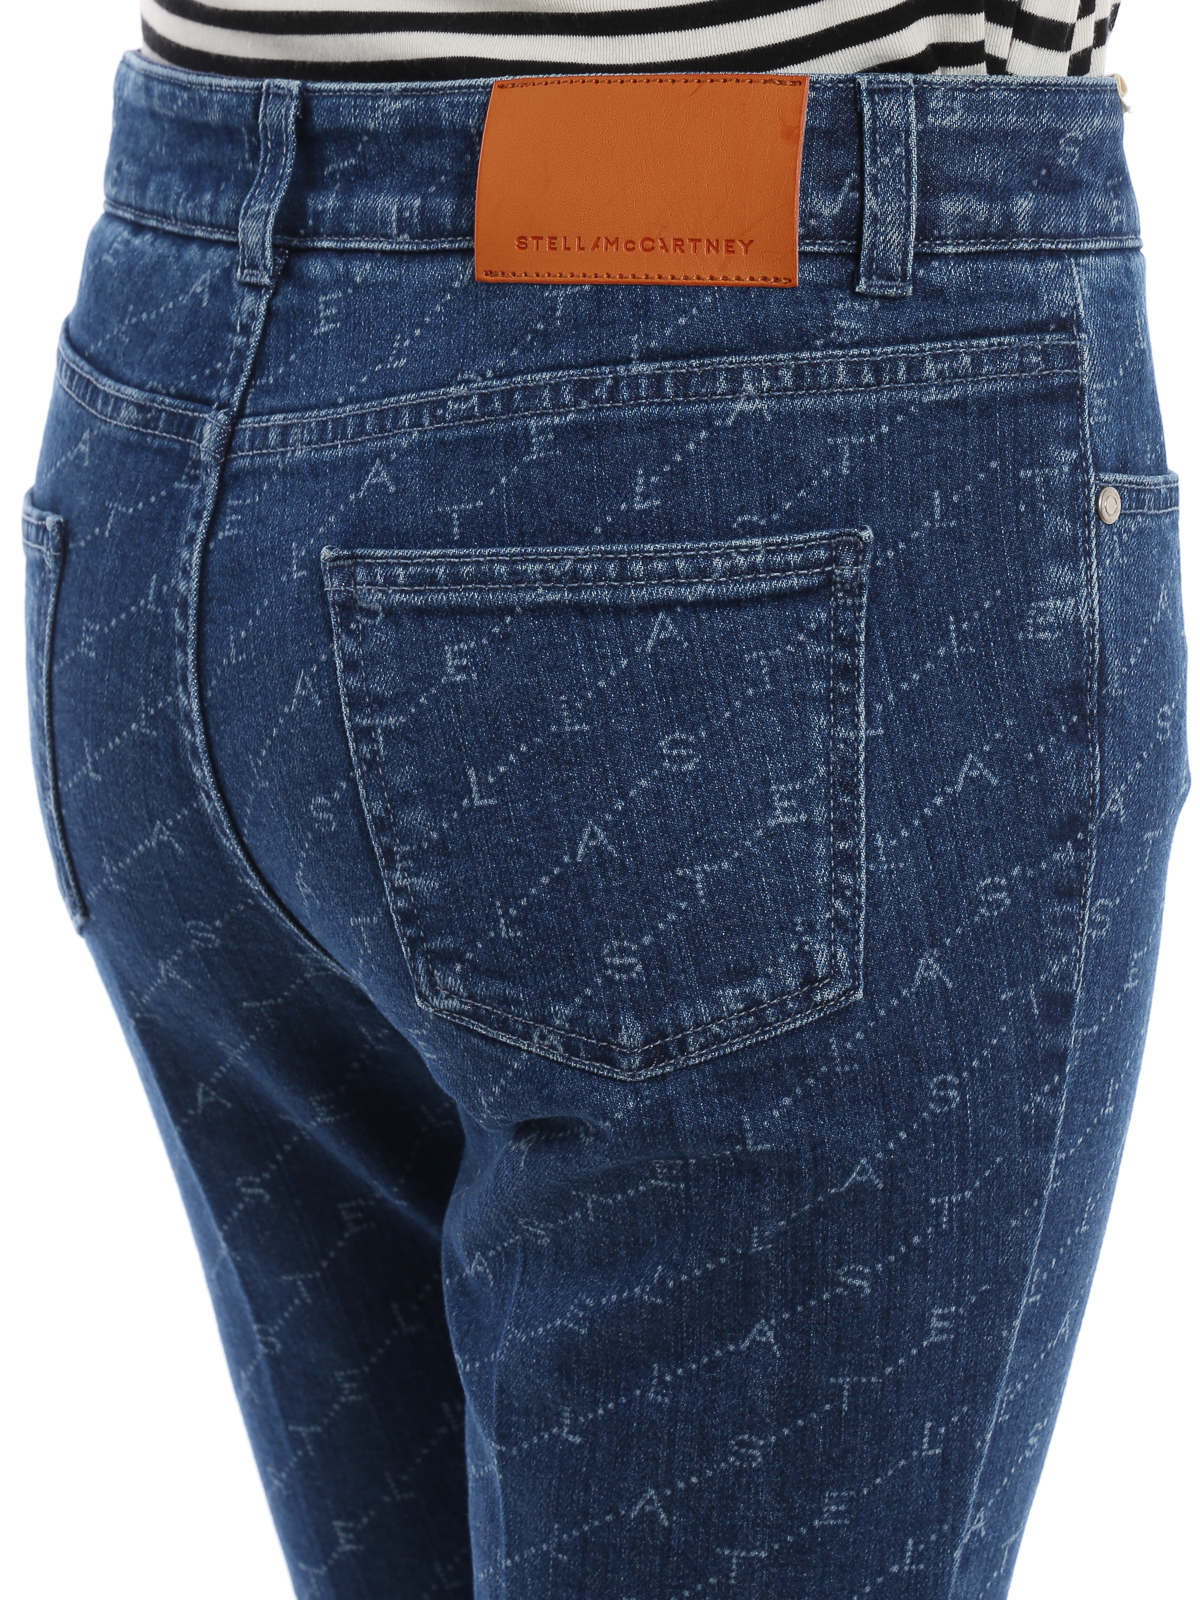 Stella Mccartney - Jeans in denim con stampa monogramma - jeans skinny -  391883SMH404401